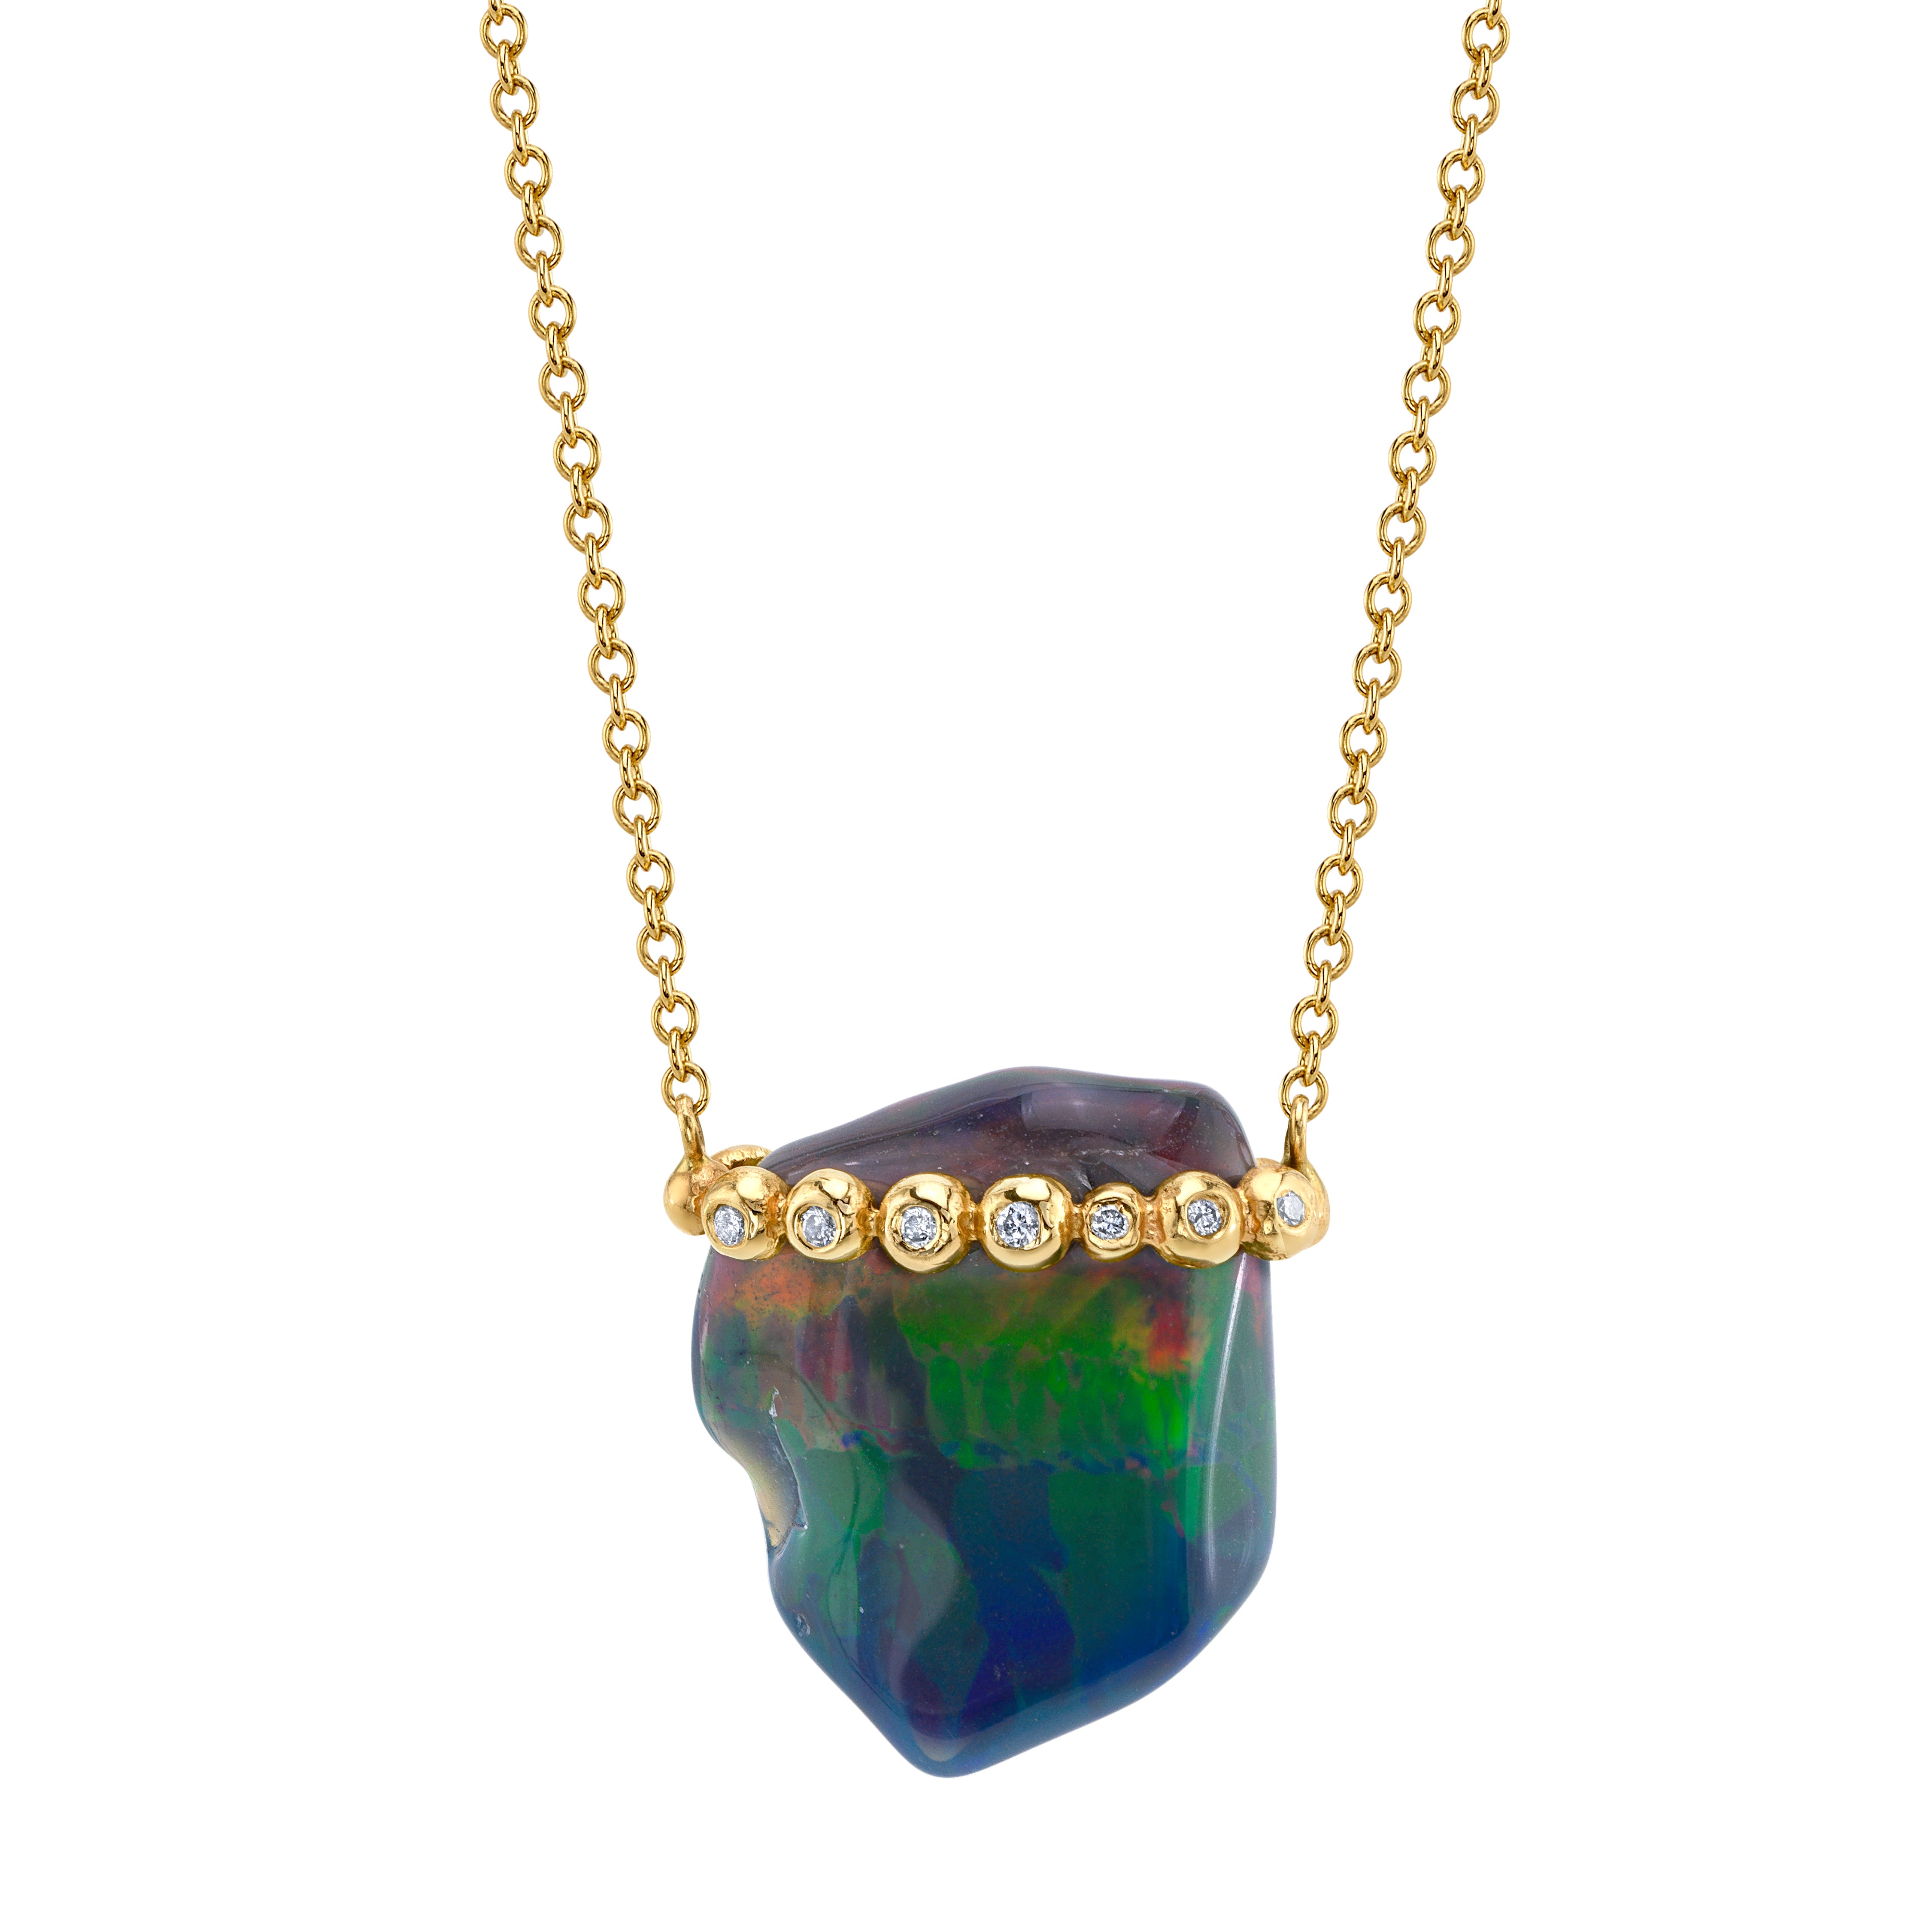 One of a Kind Ethiopian Opal Necklace Pendant Jill Hoffmeister   